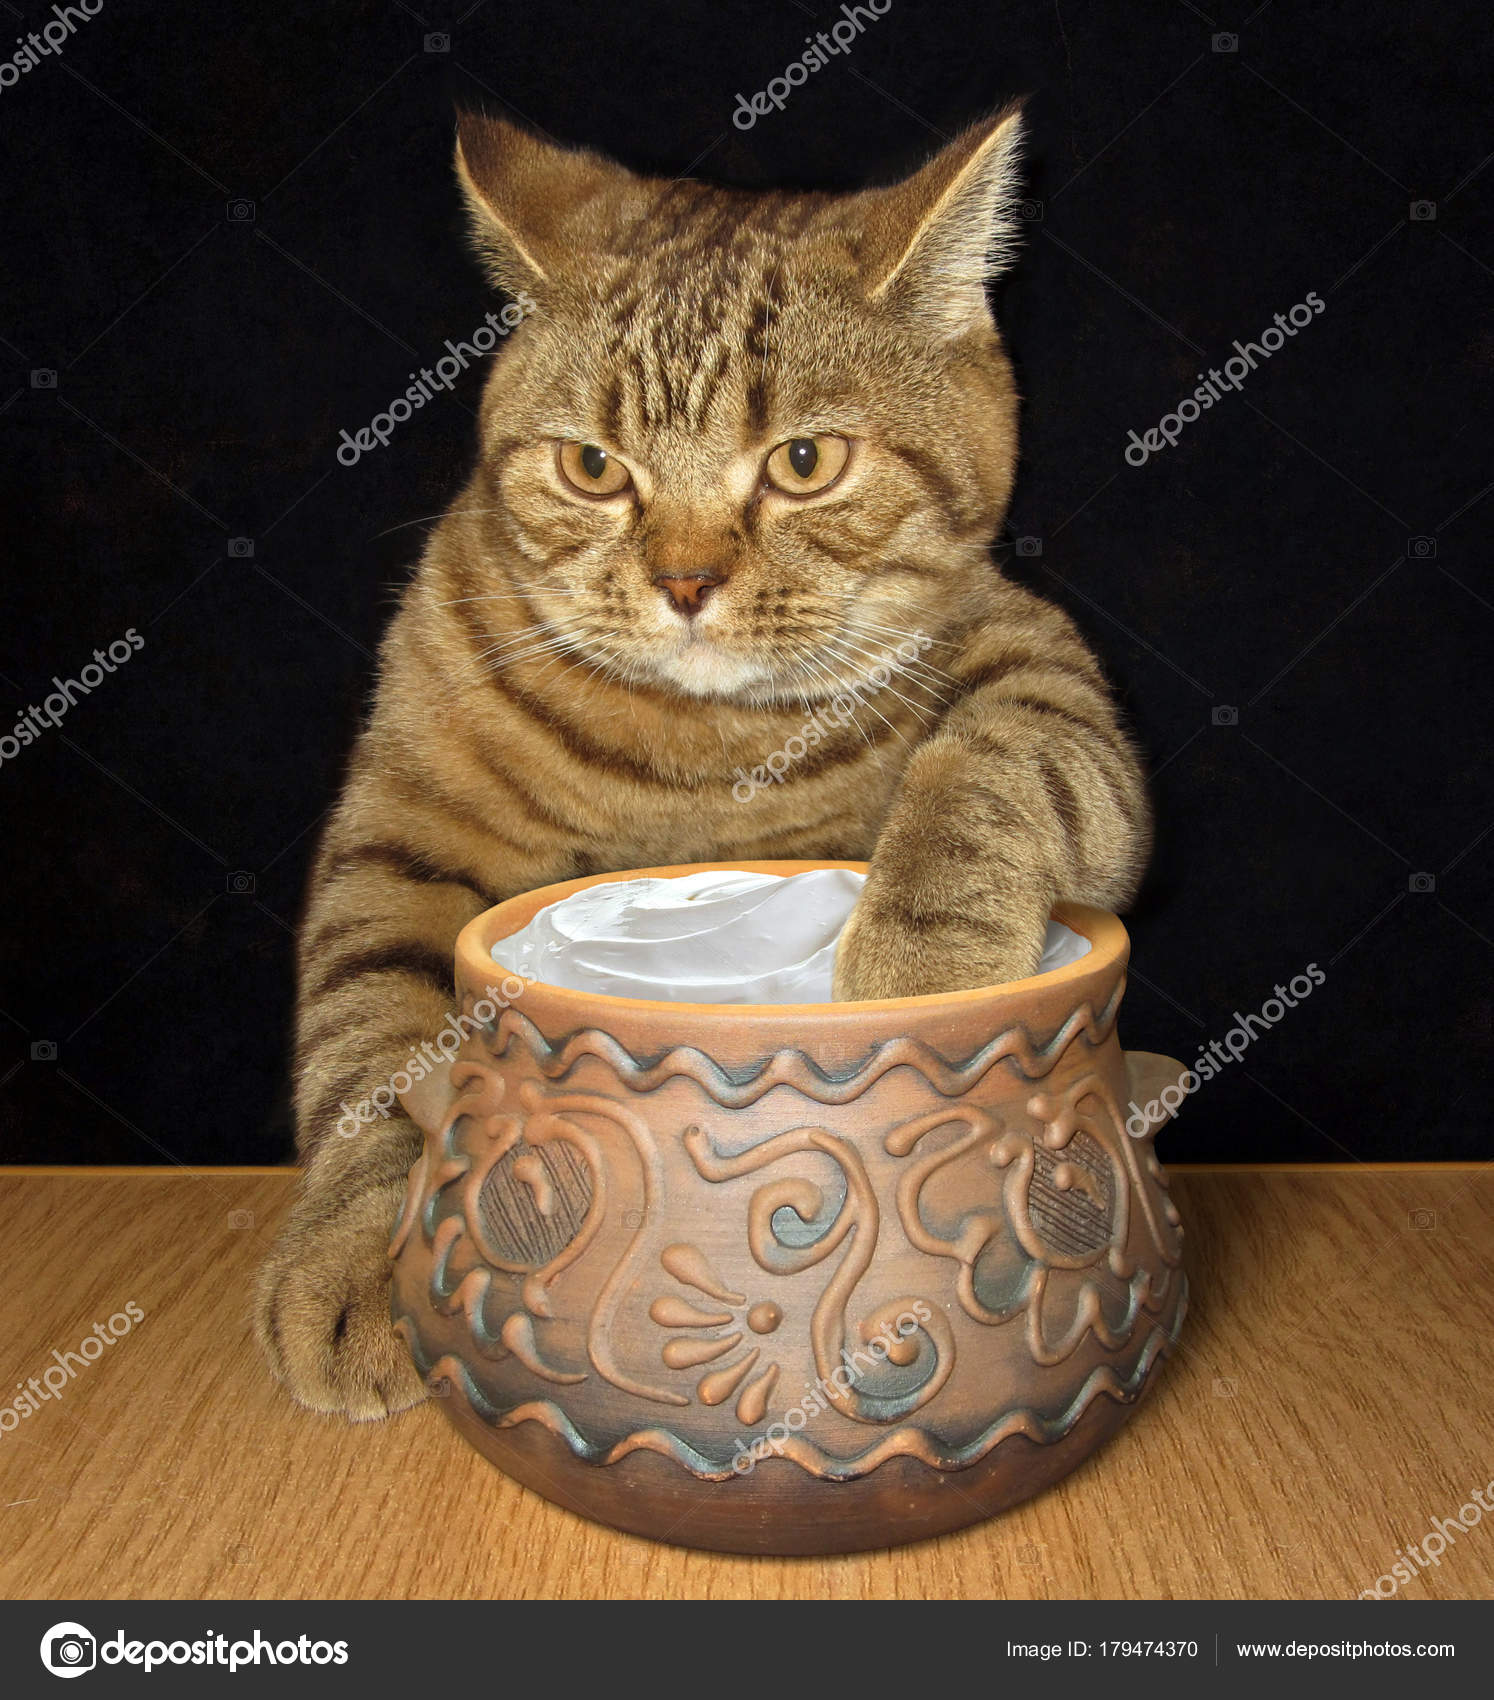 Cat with a pot of sour cream — Stock Photo © Iridi #179474370